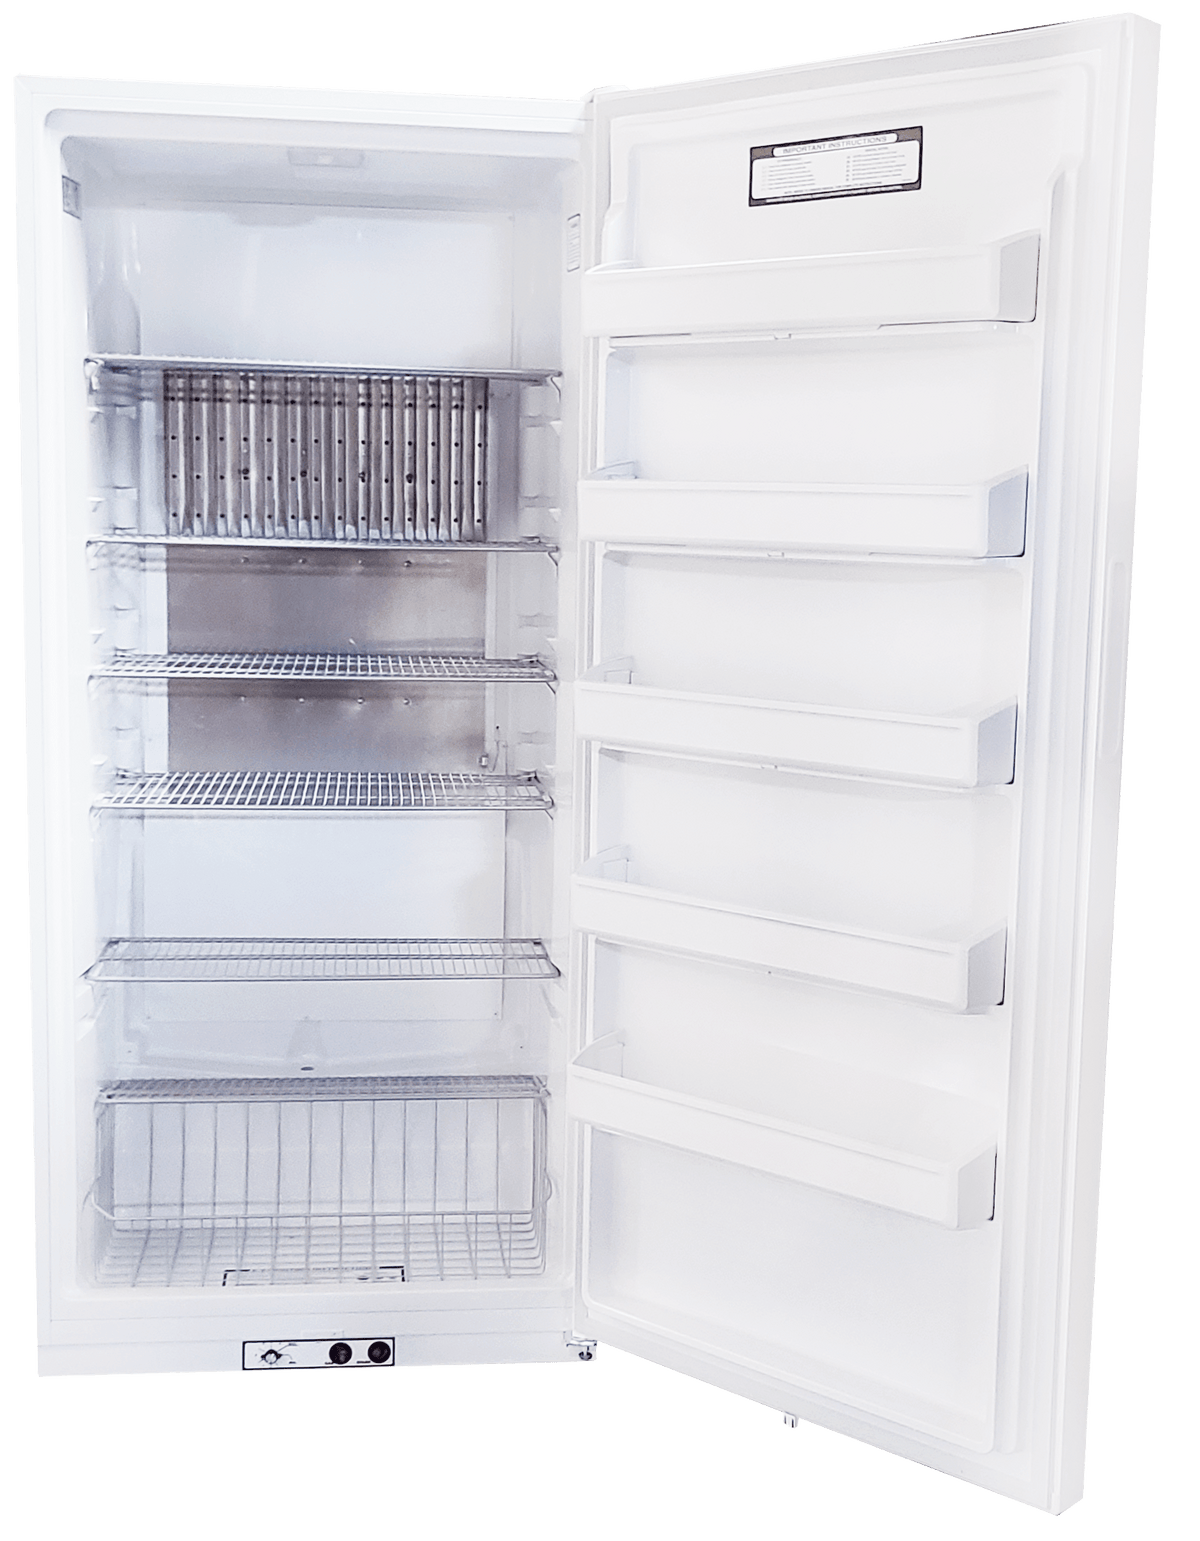 EZ Freeze Propane Refrigerator EZ Freeze EZ-21R 21 cu. ft. Propane All-Refrigerator (No Freezer Section) in White - Call for Availability